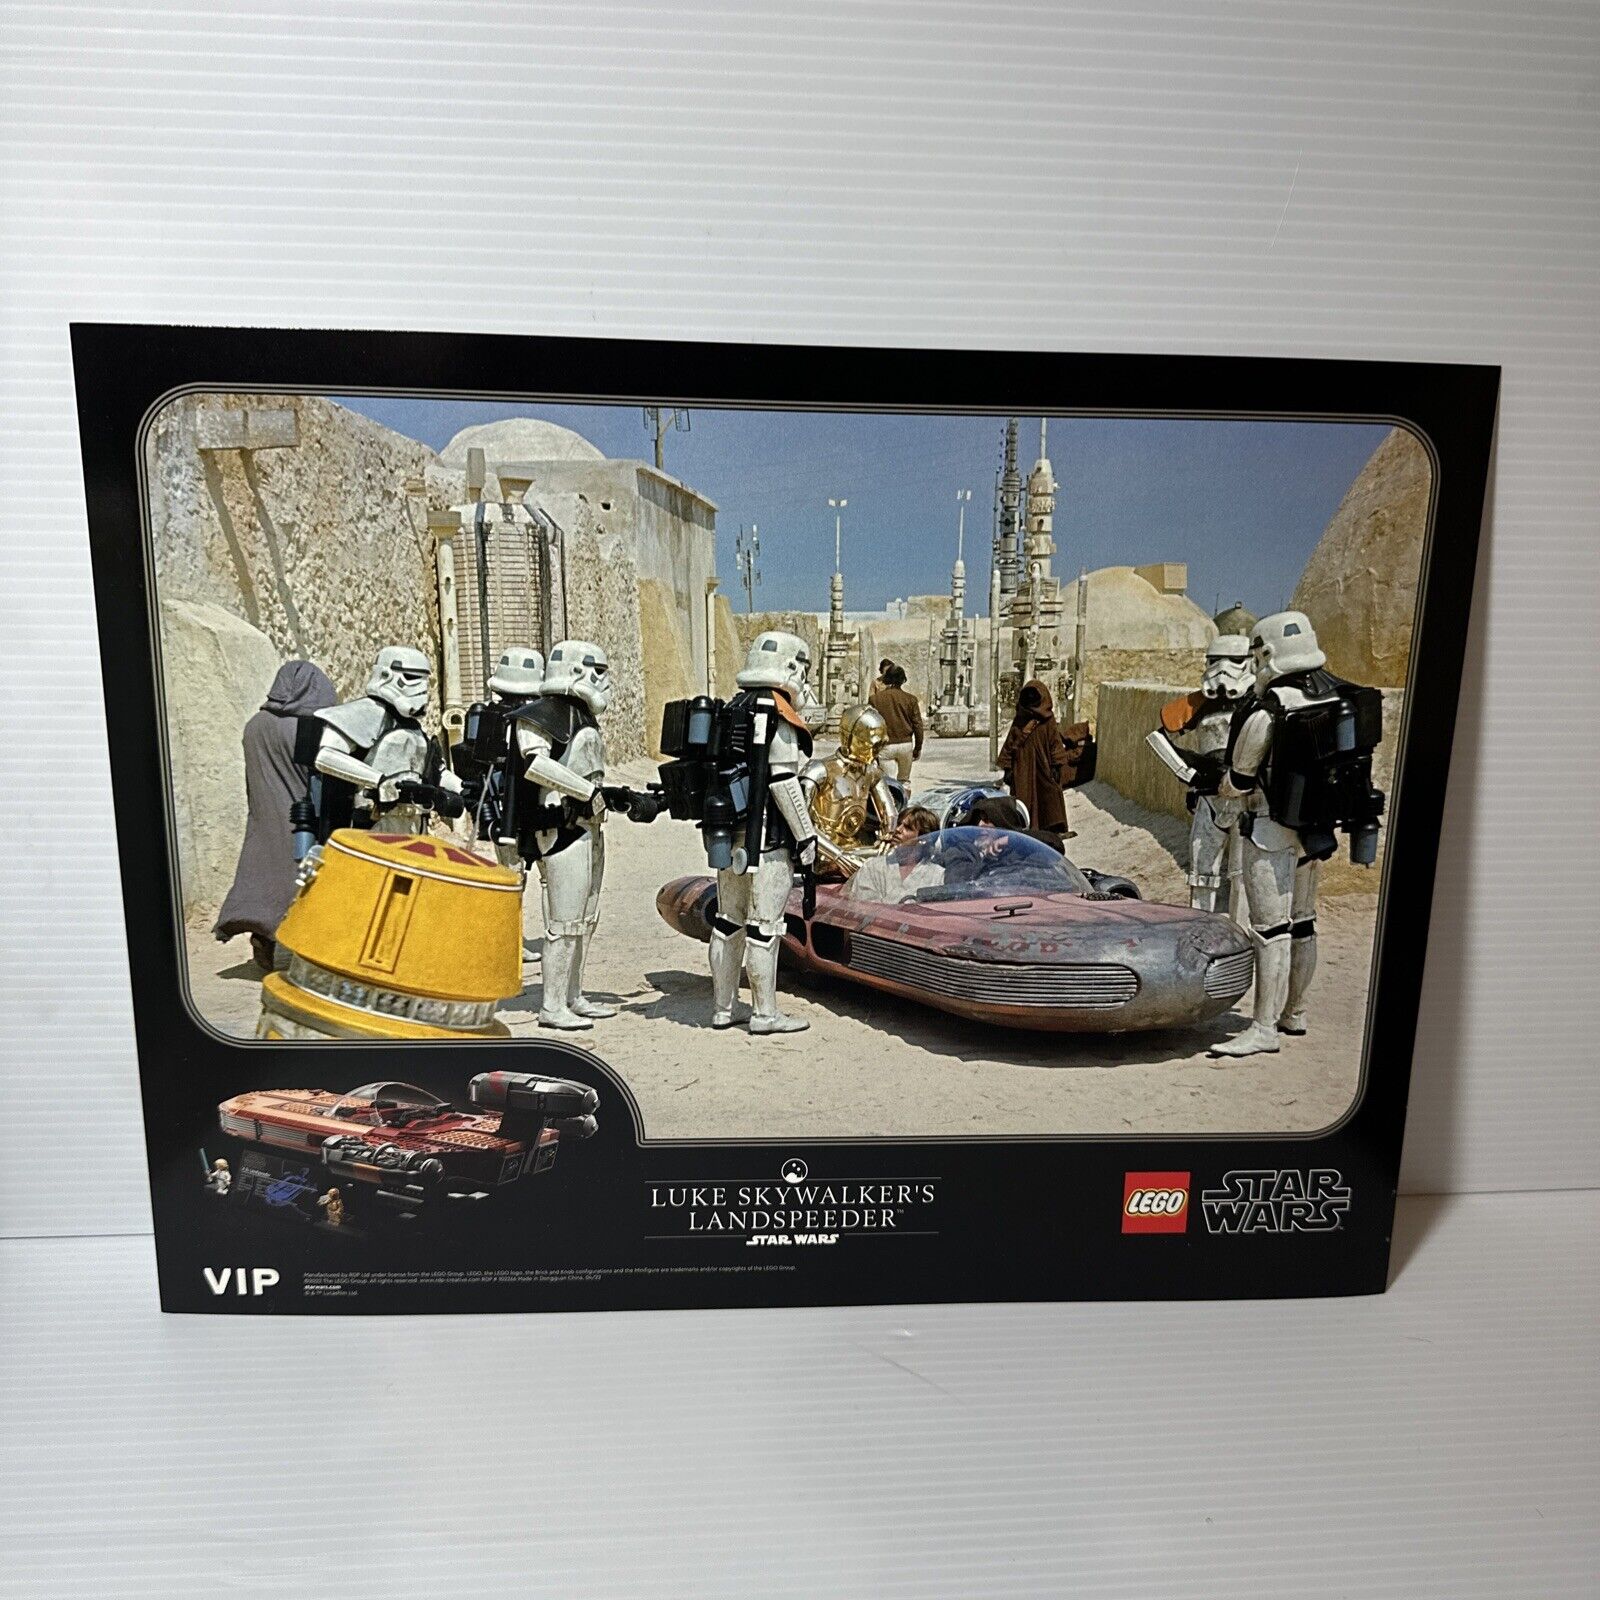 LEGO VIP Luke Skywalker's Landspeeder Limited Edition Print Star Wars poster